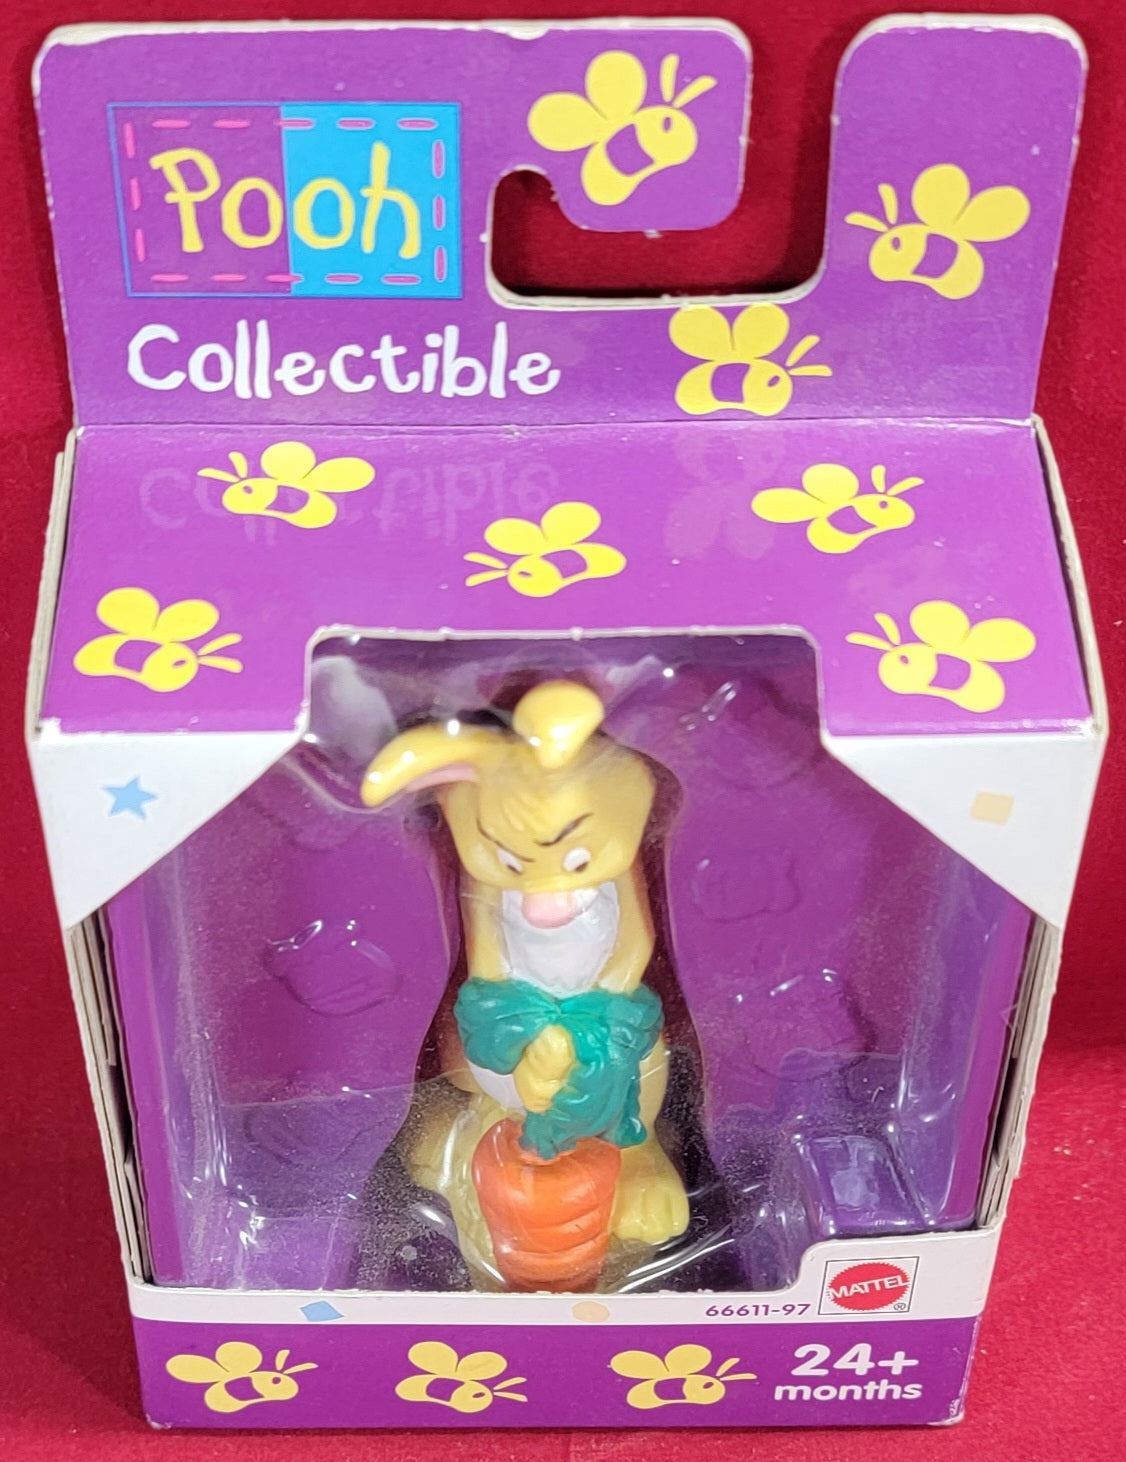 Pooh collectibles rabbit figure (nib)